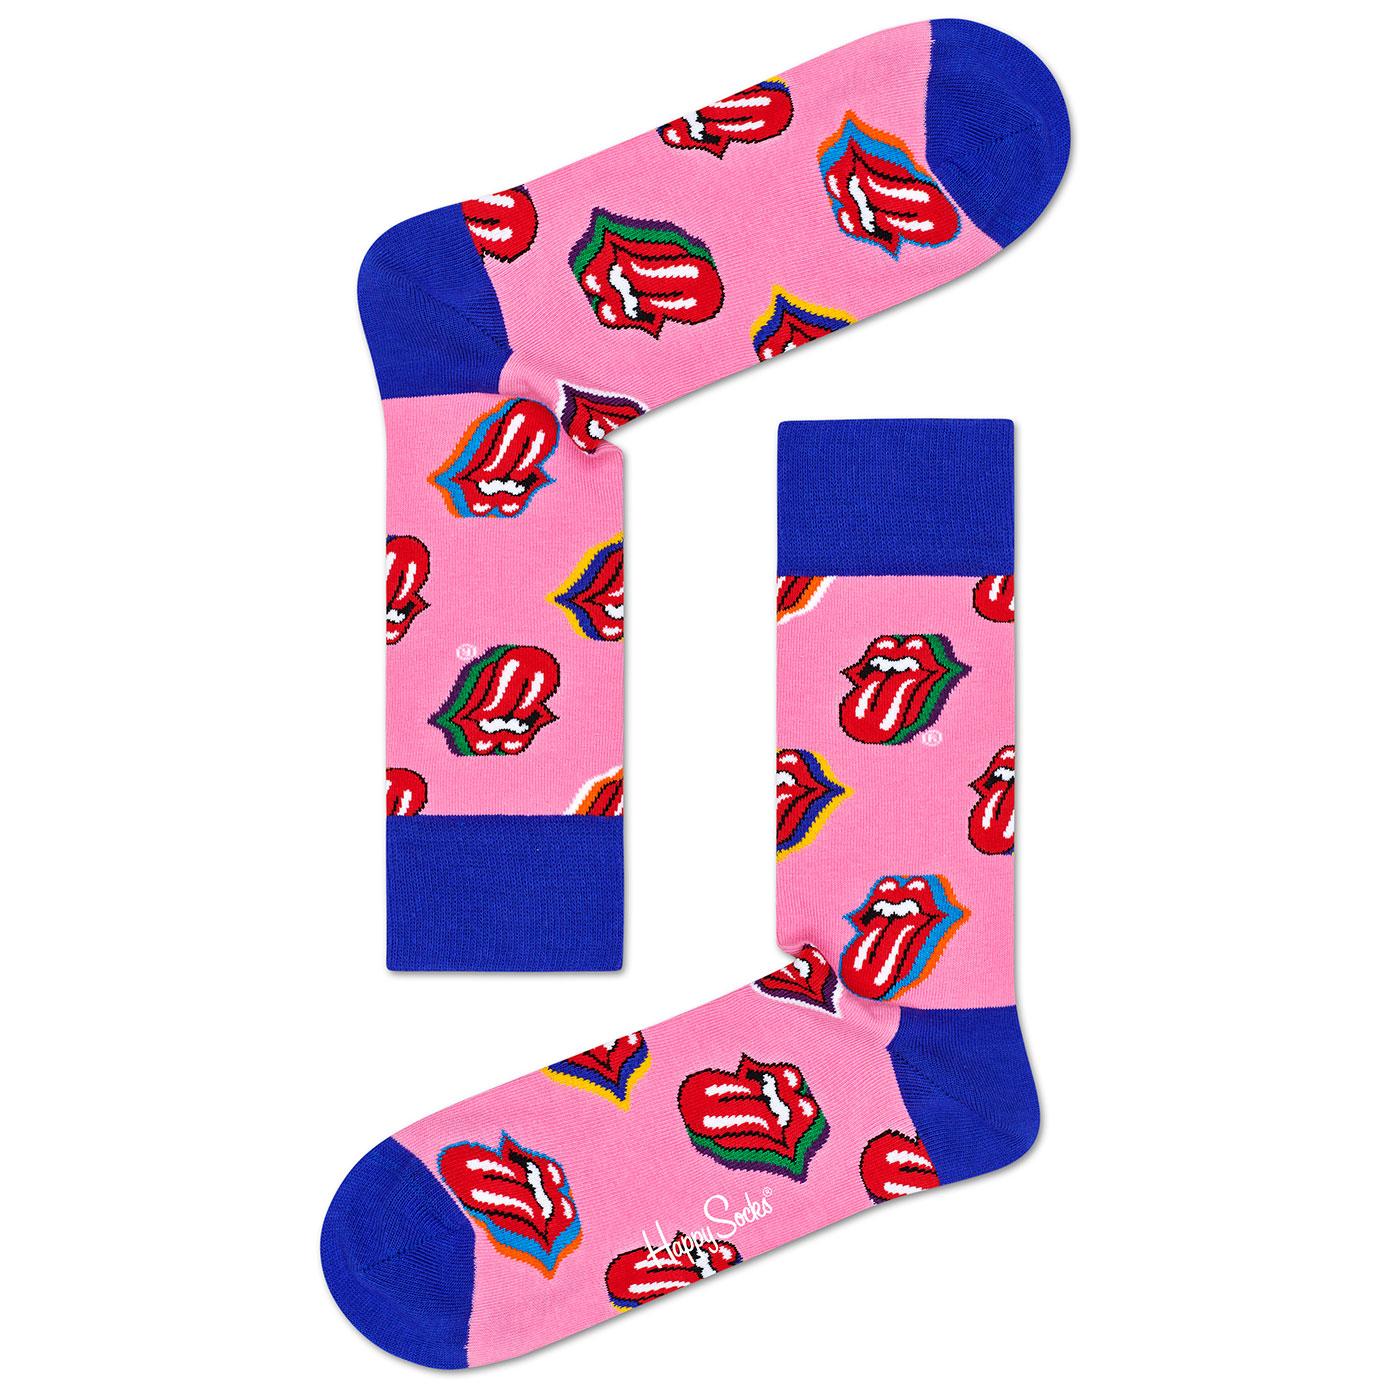 + HAPPY SOCKS x ROLLING STONES Candy Kiss Socks